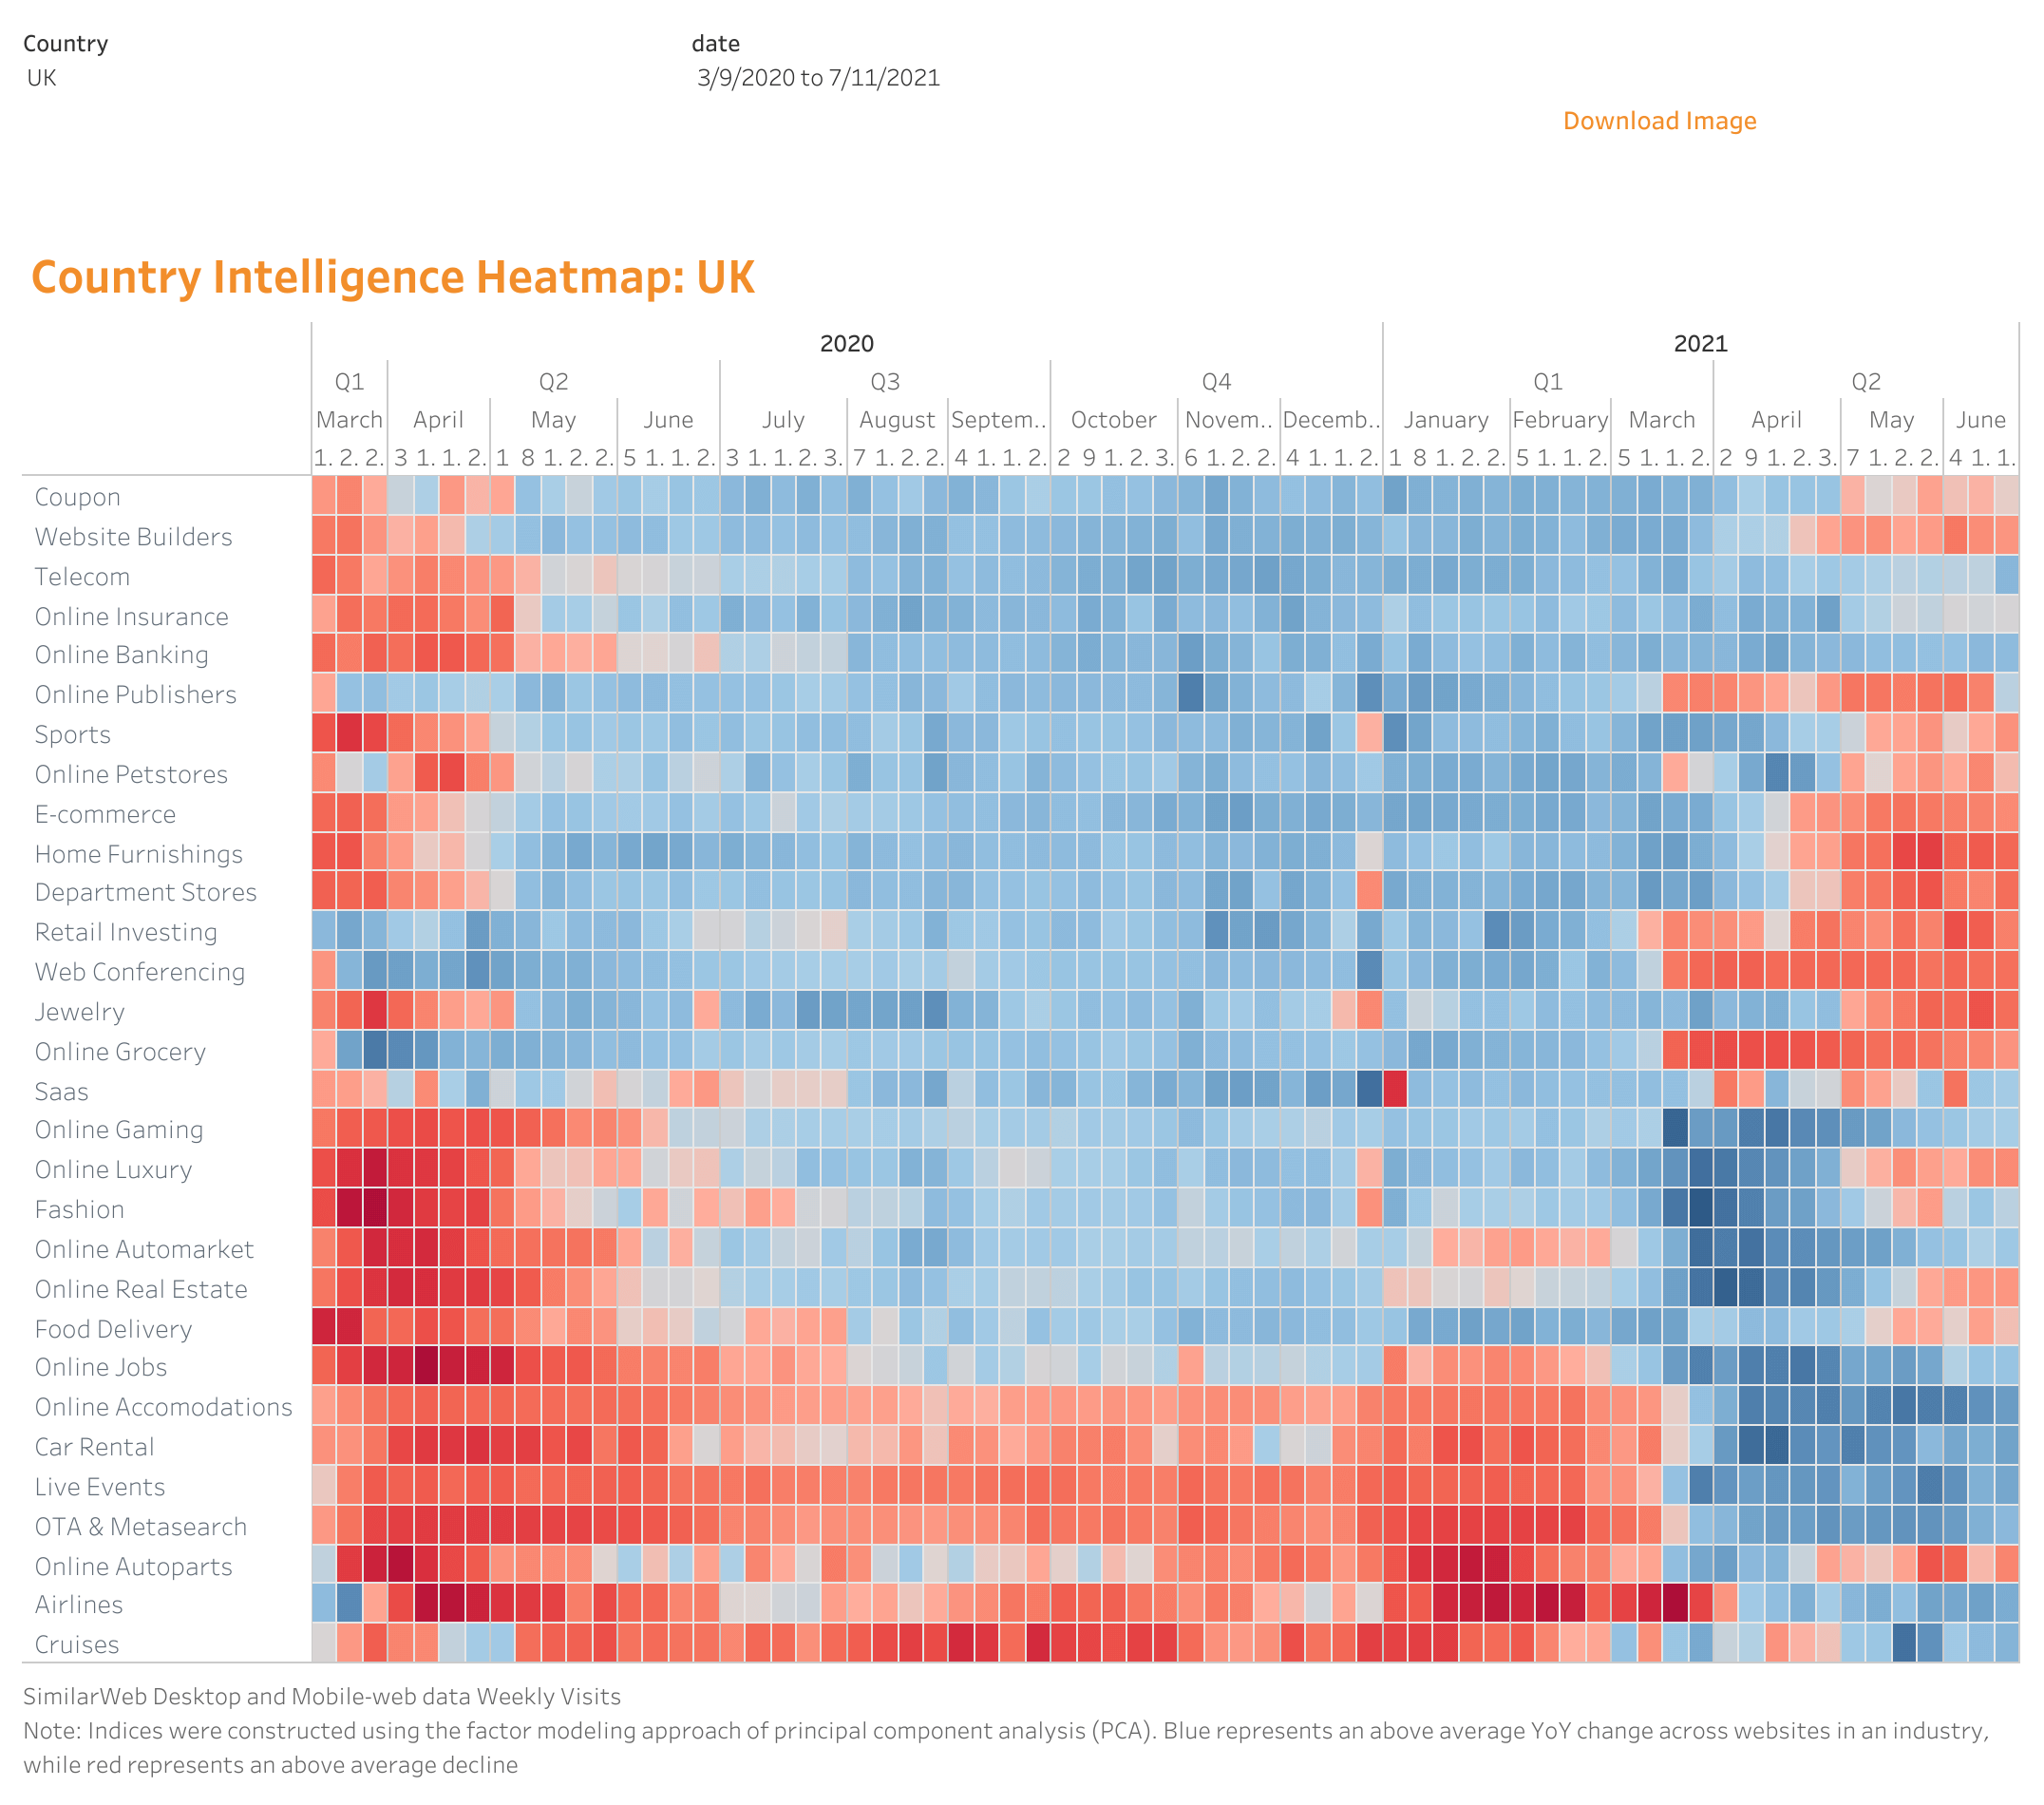 Country Intelligence Heatmap - UK